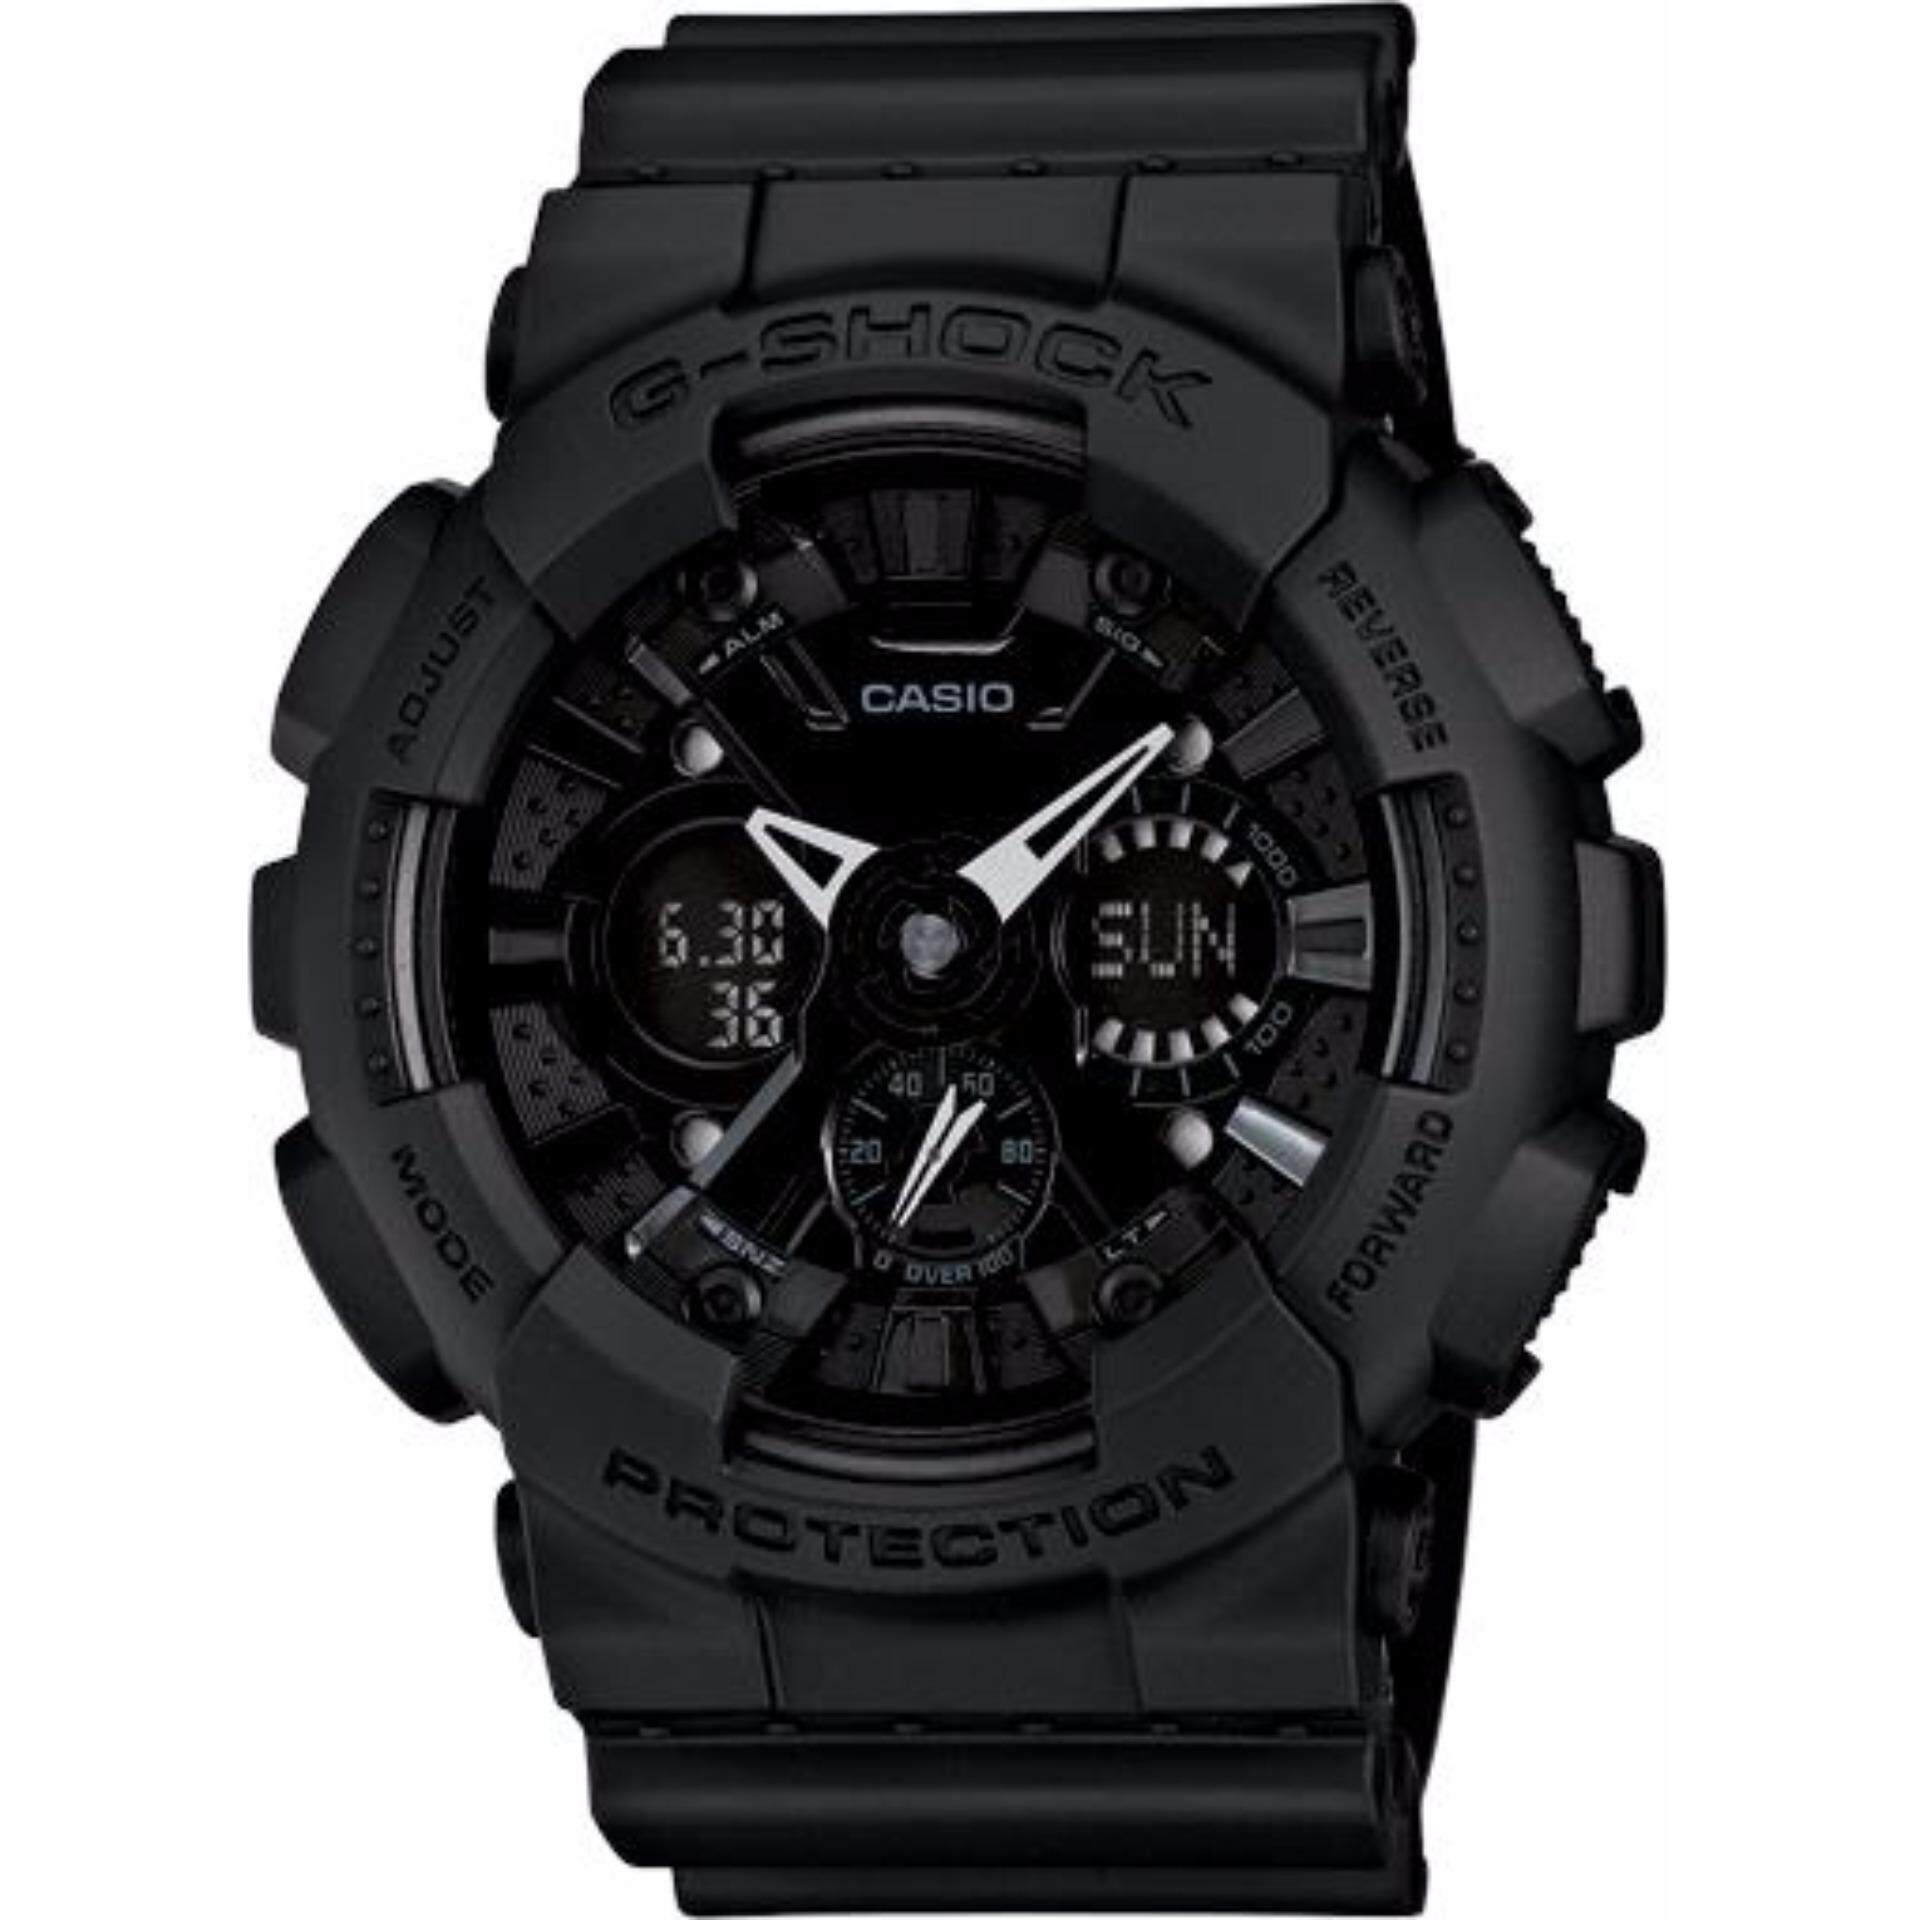 Casio G-Shock Men's Black Resin Strap Watch GA-120BB-1A